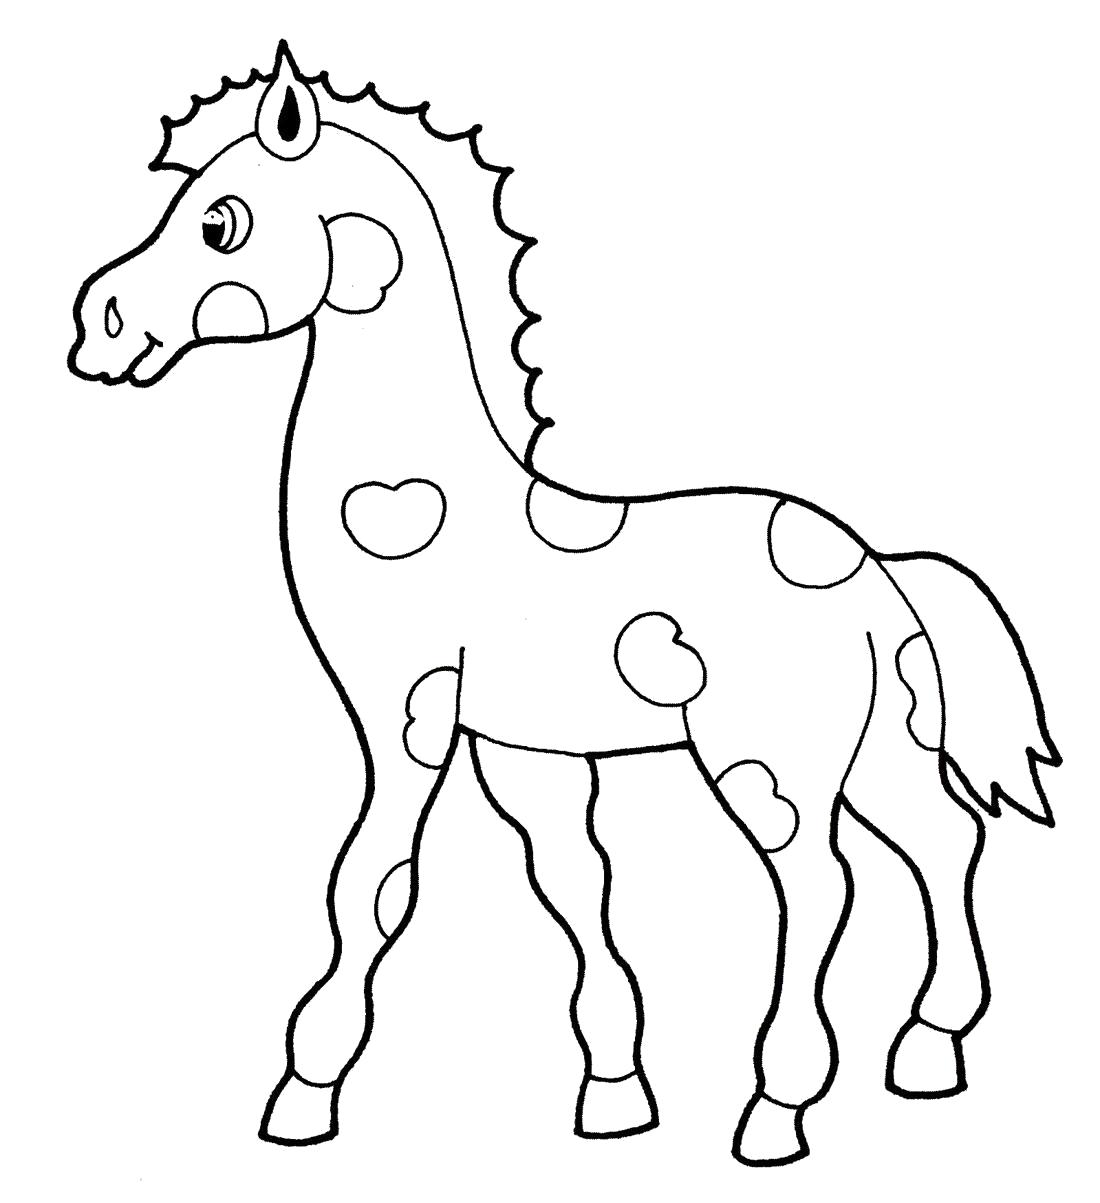 Название: Раскраска Пятнистая лошадка. Категория: Лошади. Теги: Лошади.